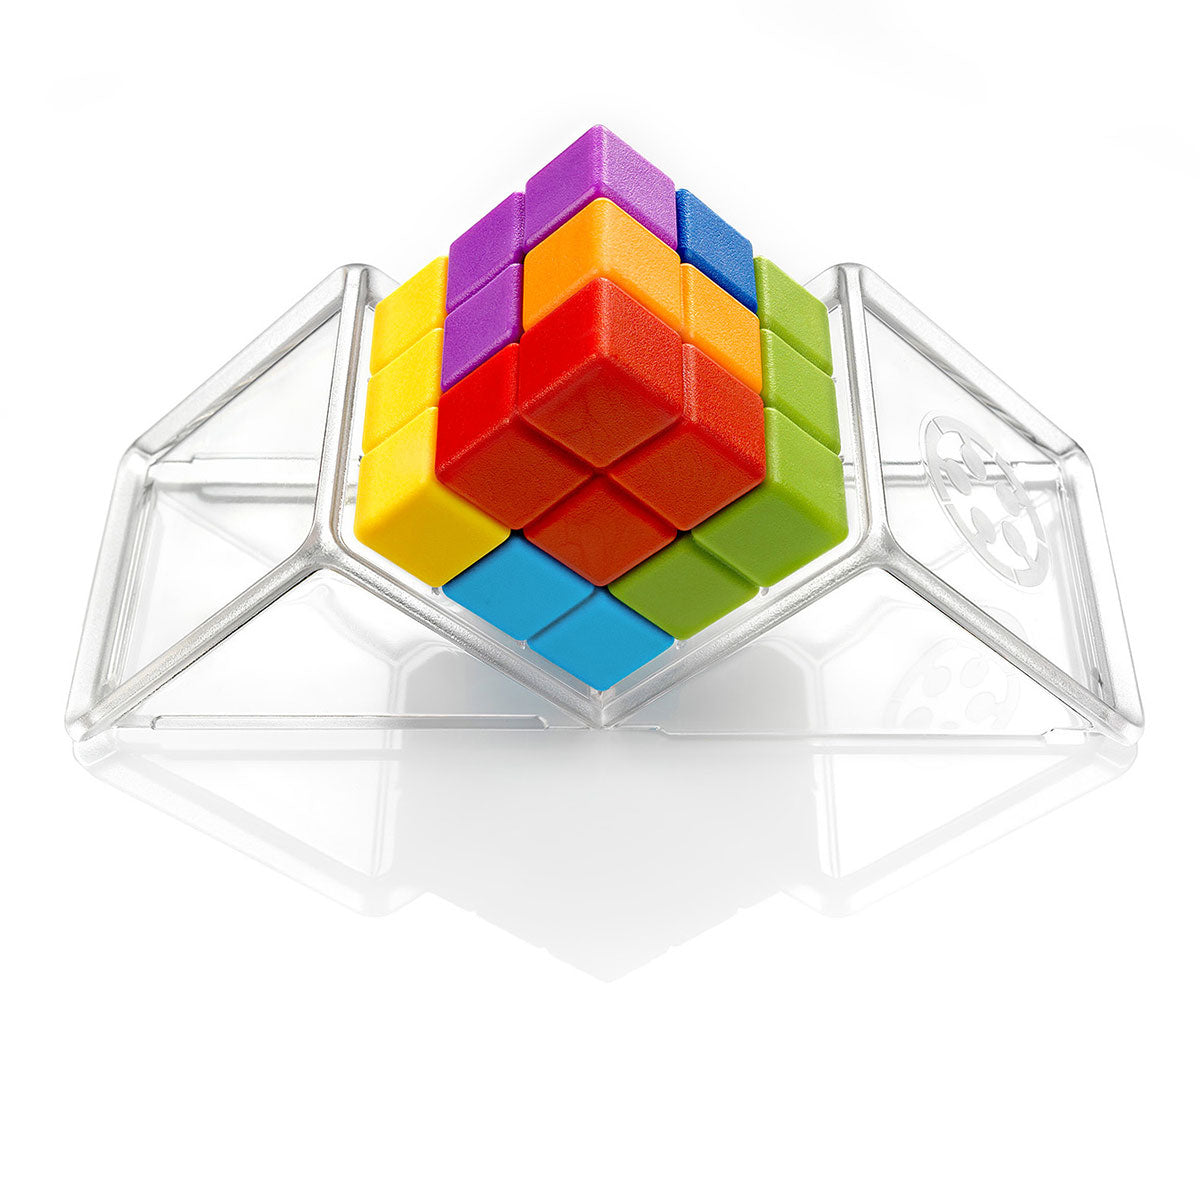 SmartGames Cube Puzzler: Go